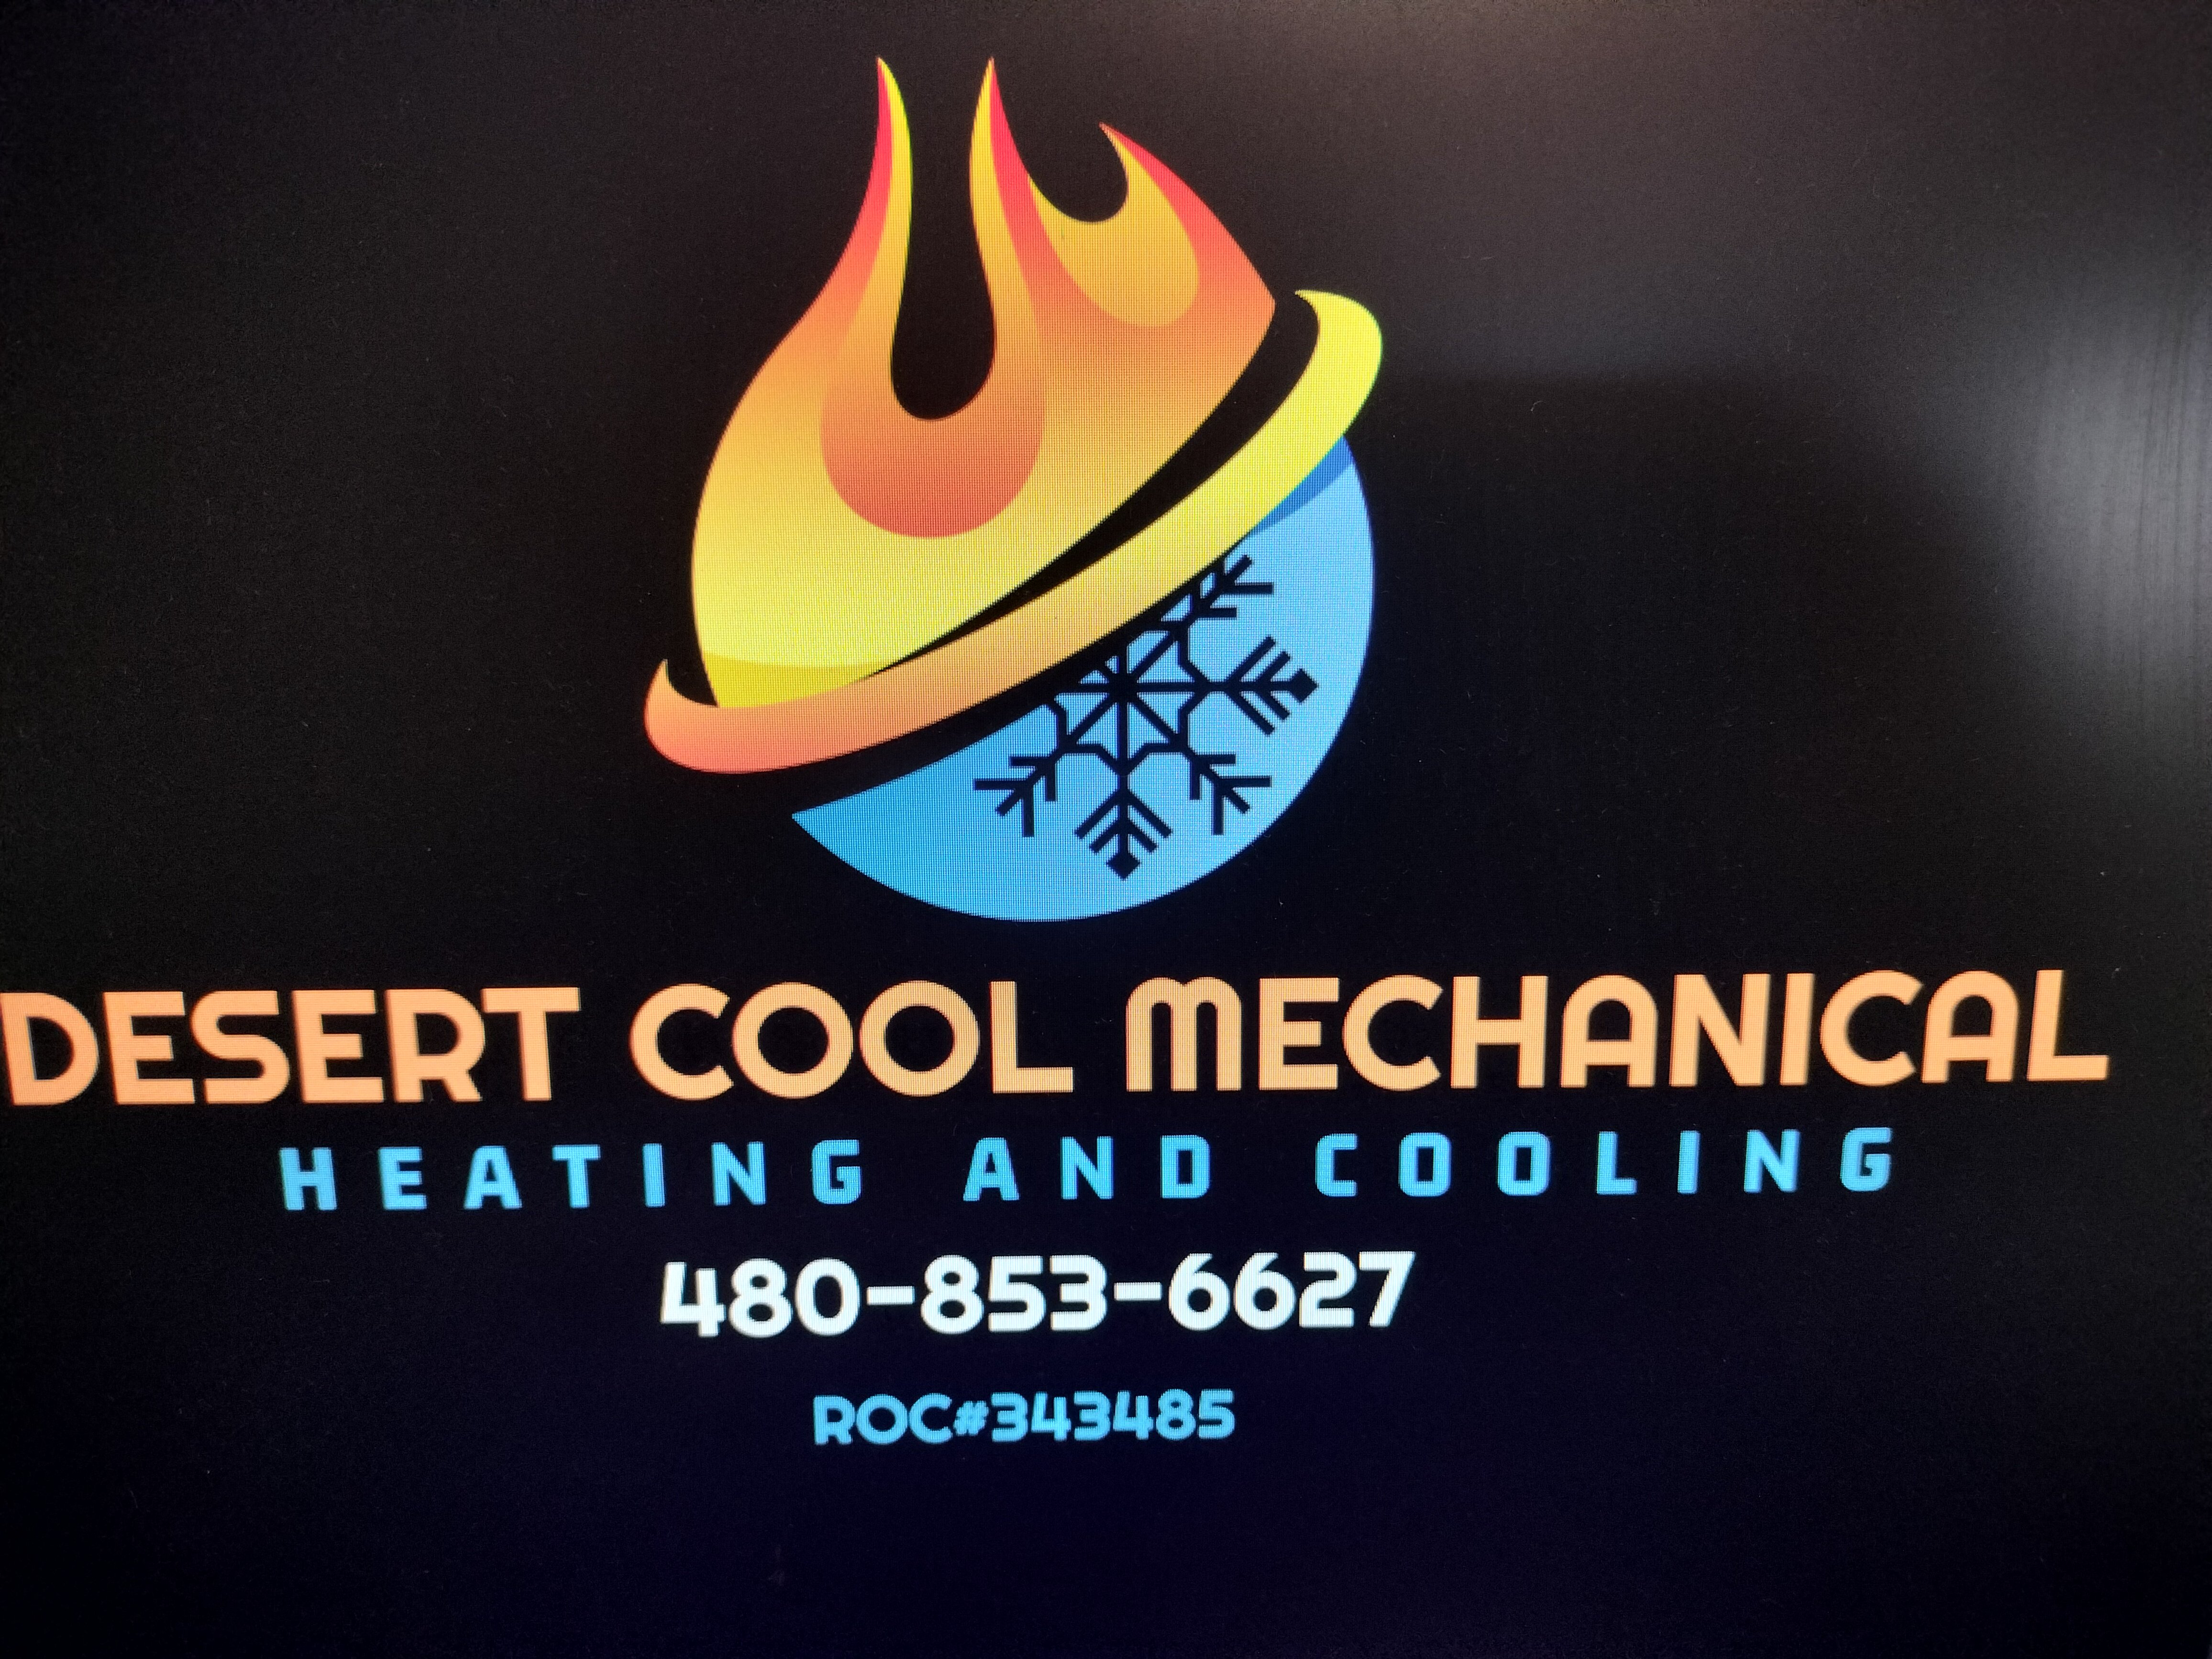 Desert Cool Mechanical LLC Logo